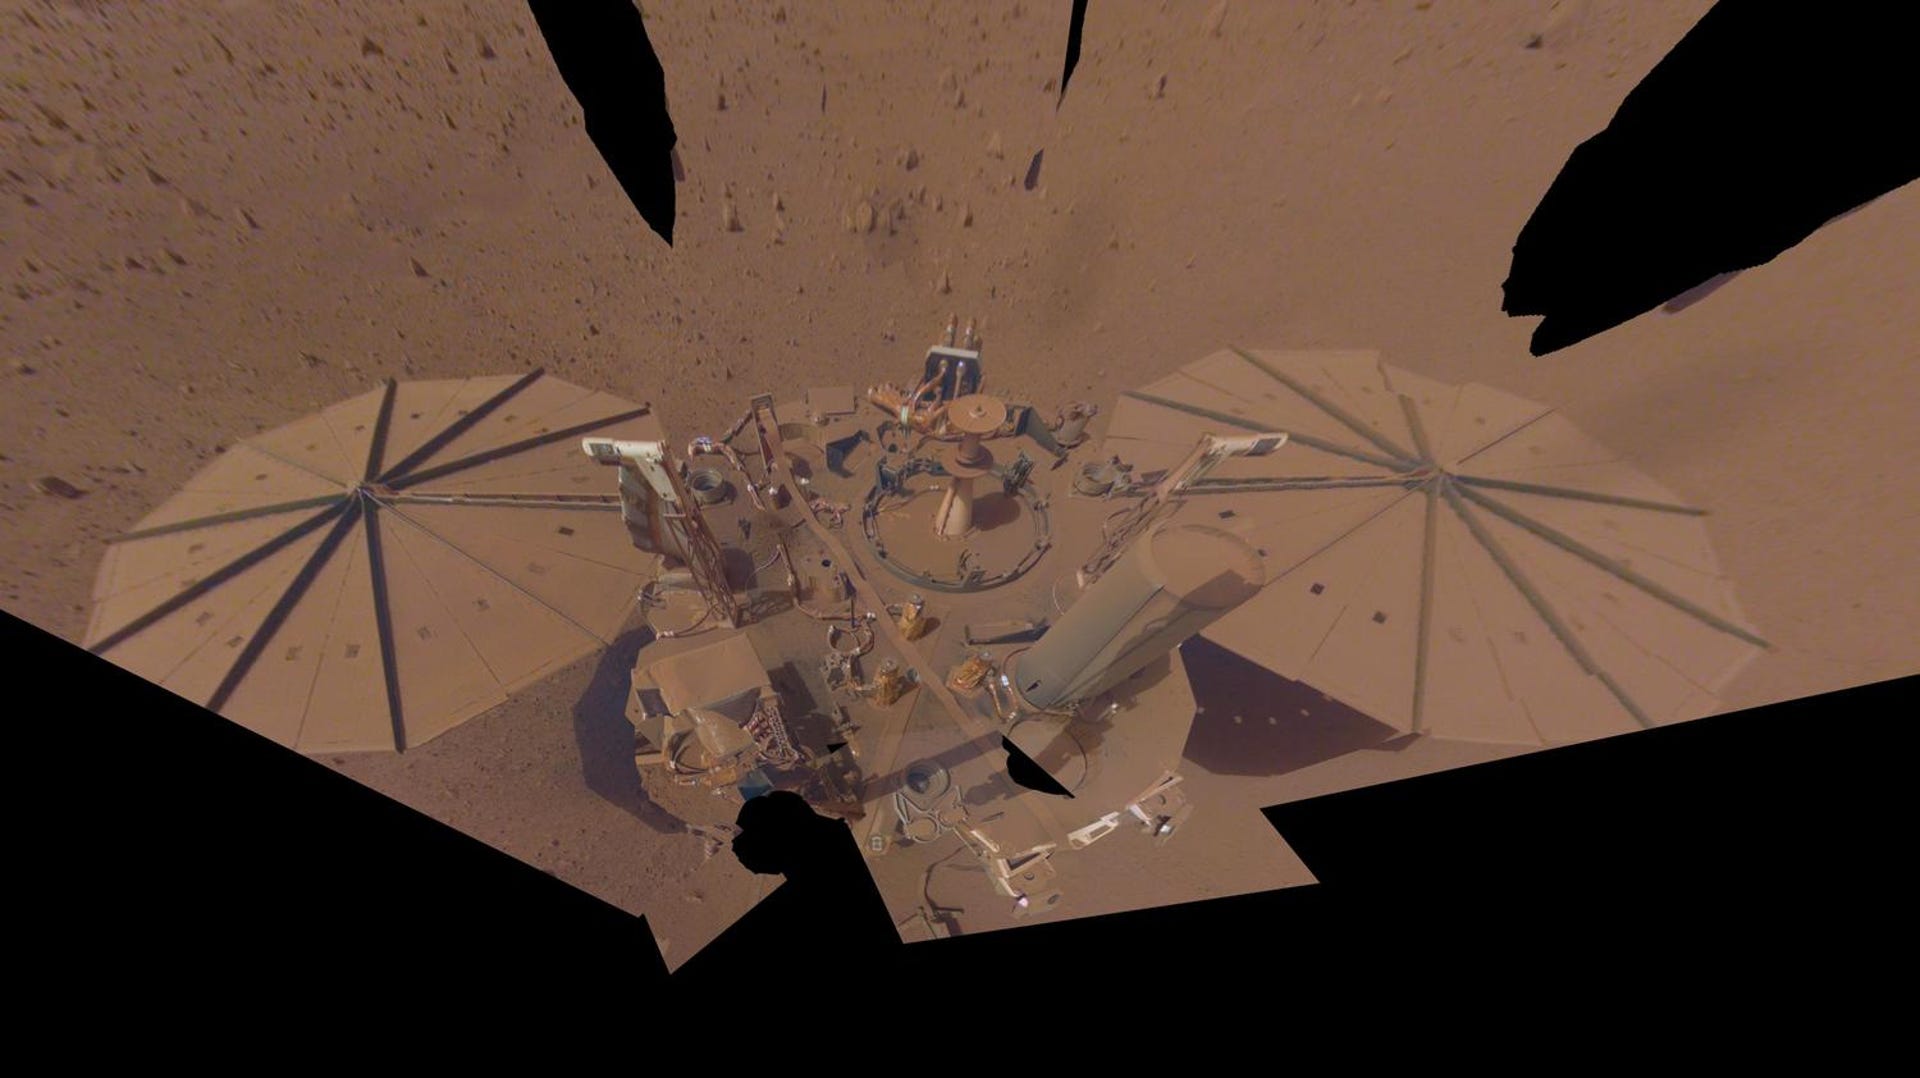 Mars InSight lander shows off its dirt-caked solar panels